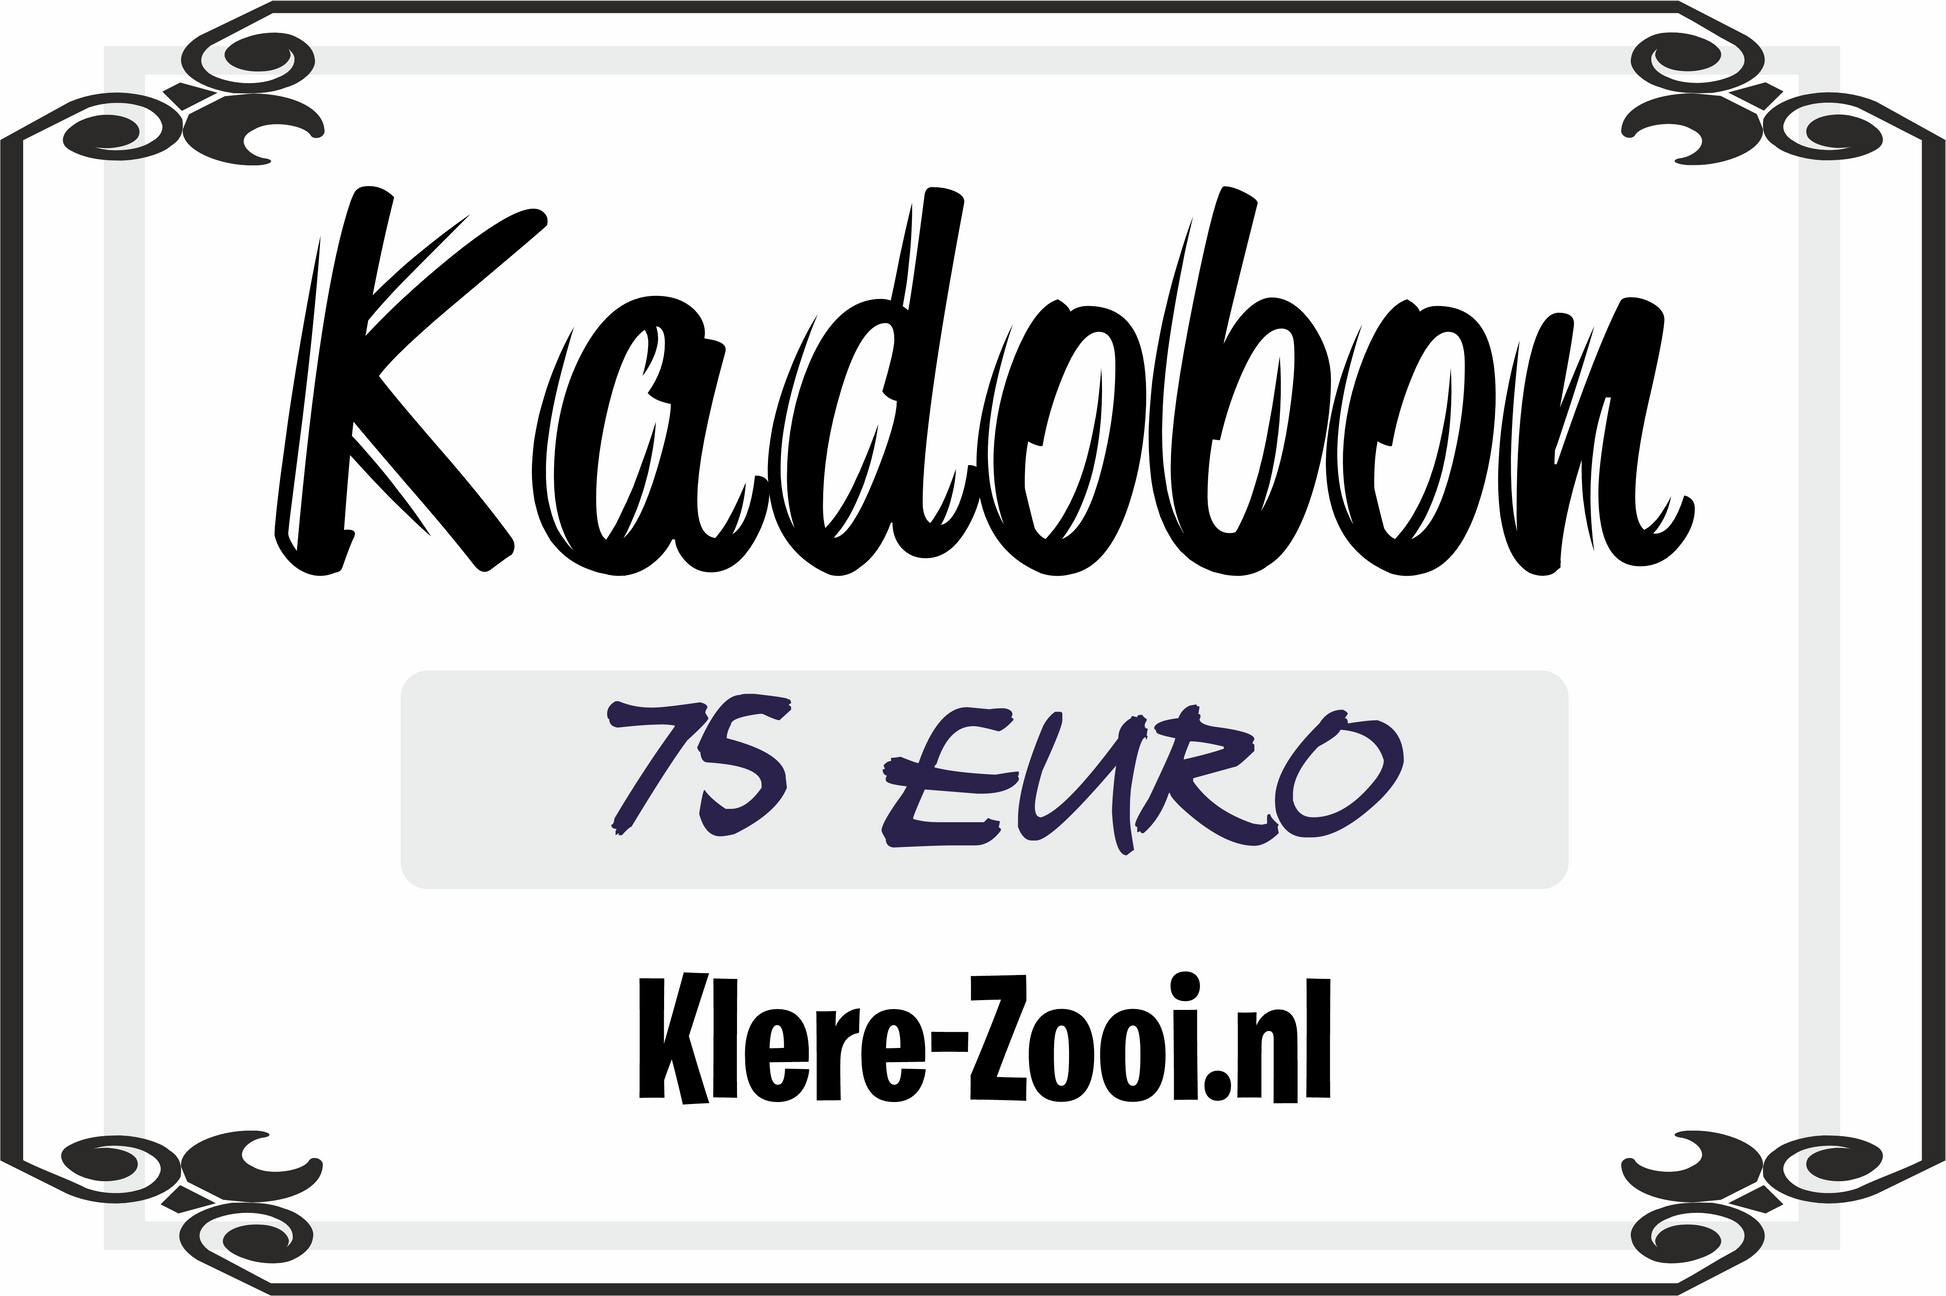 Klere-Zooi.nl Kadobon - € 75,00